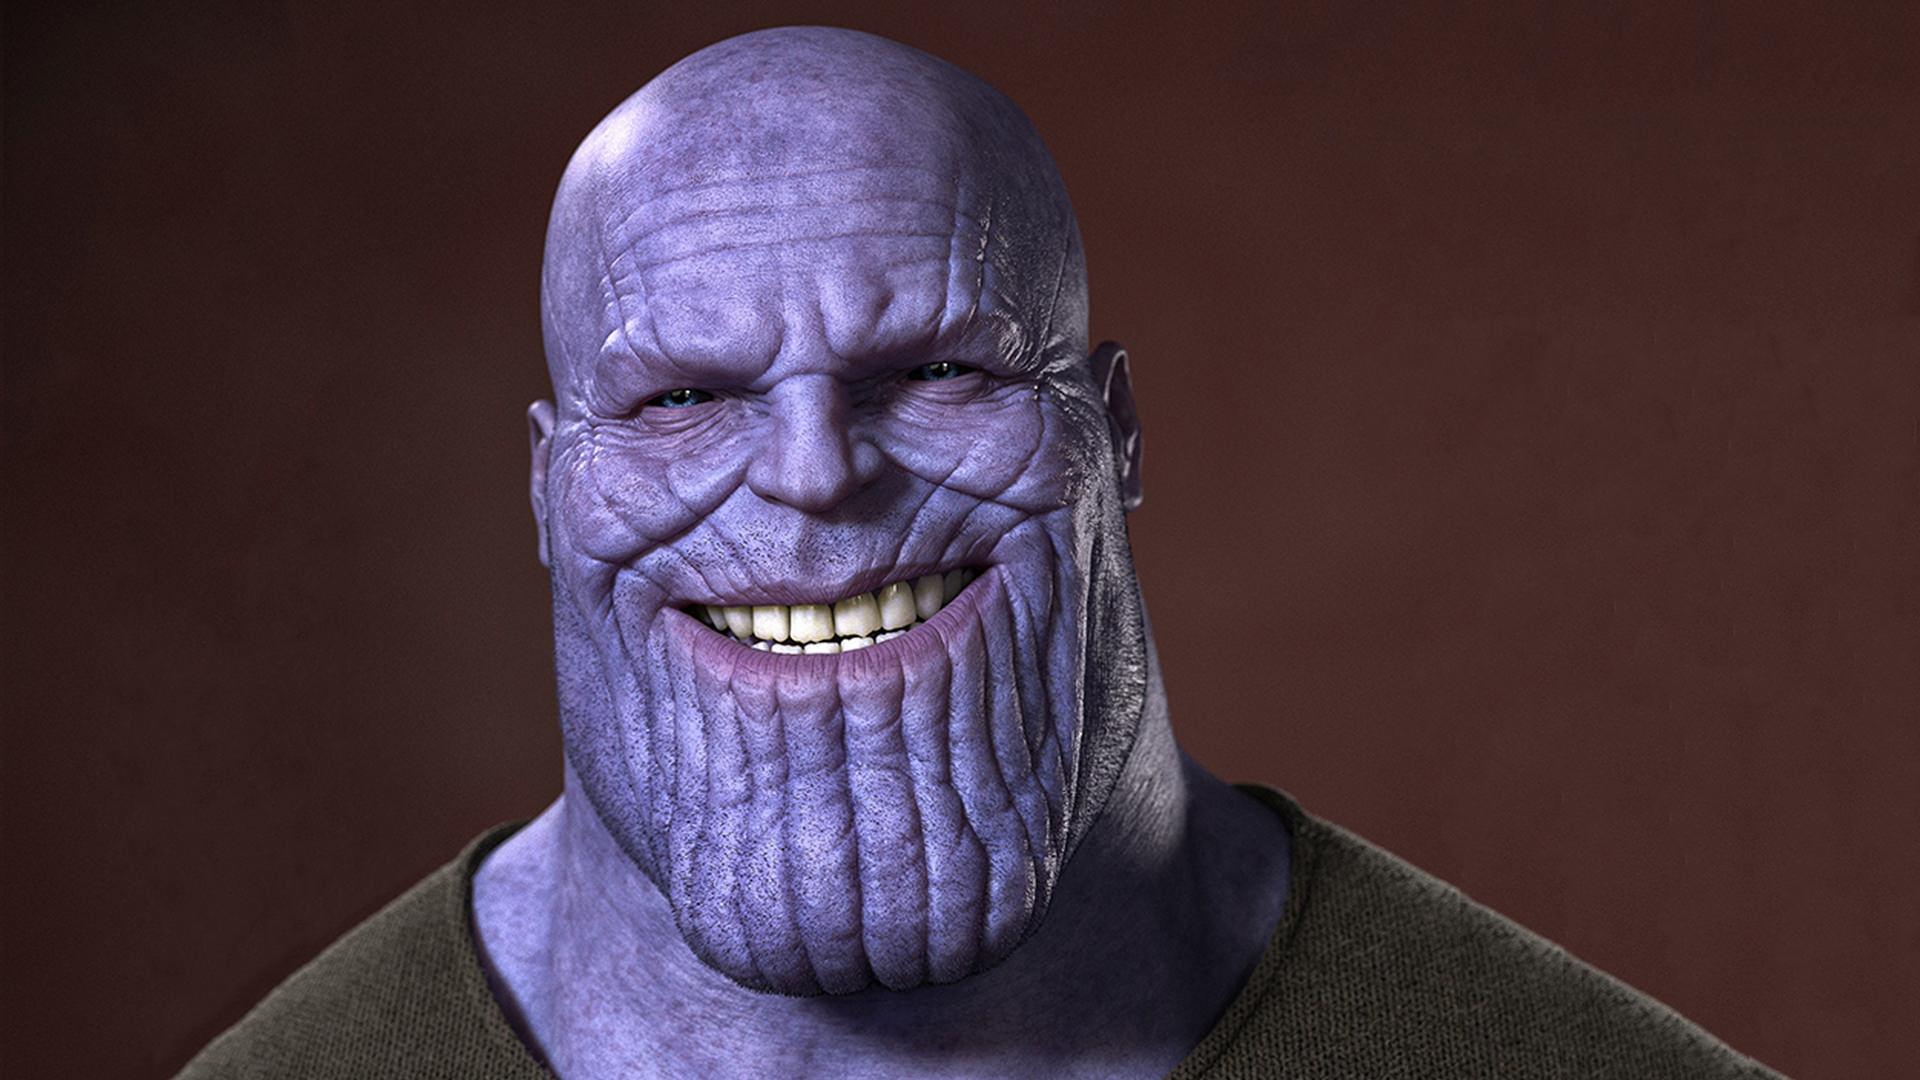 Thanos Smiling Wallpaper, HD Movies 4K Wallpaper, Image